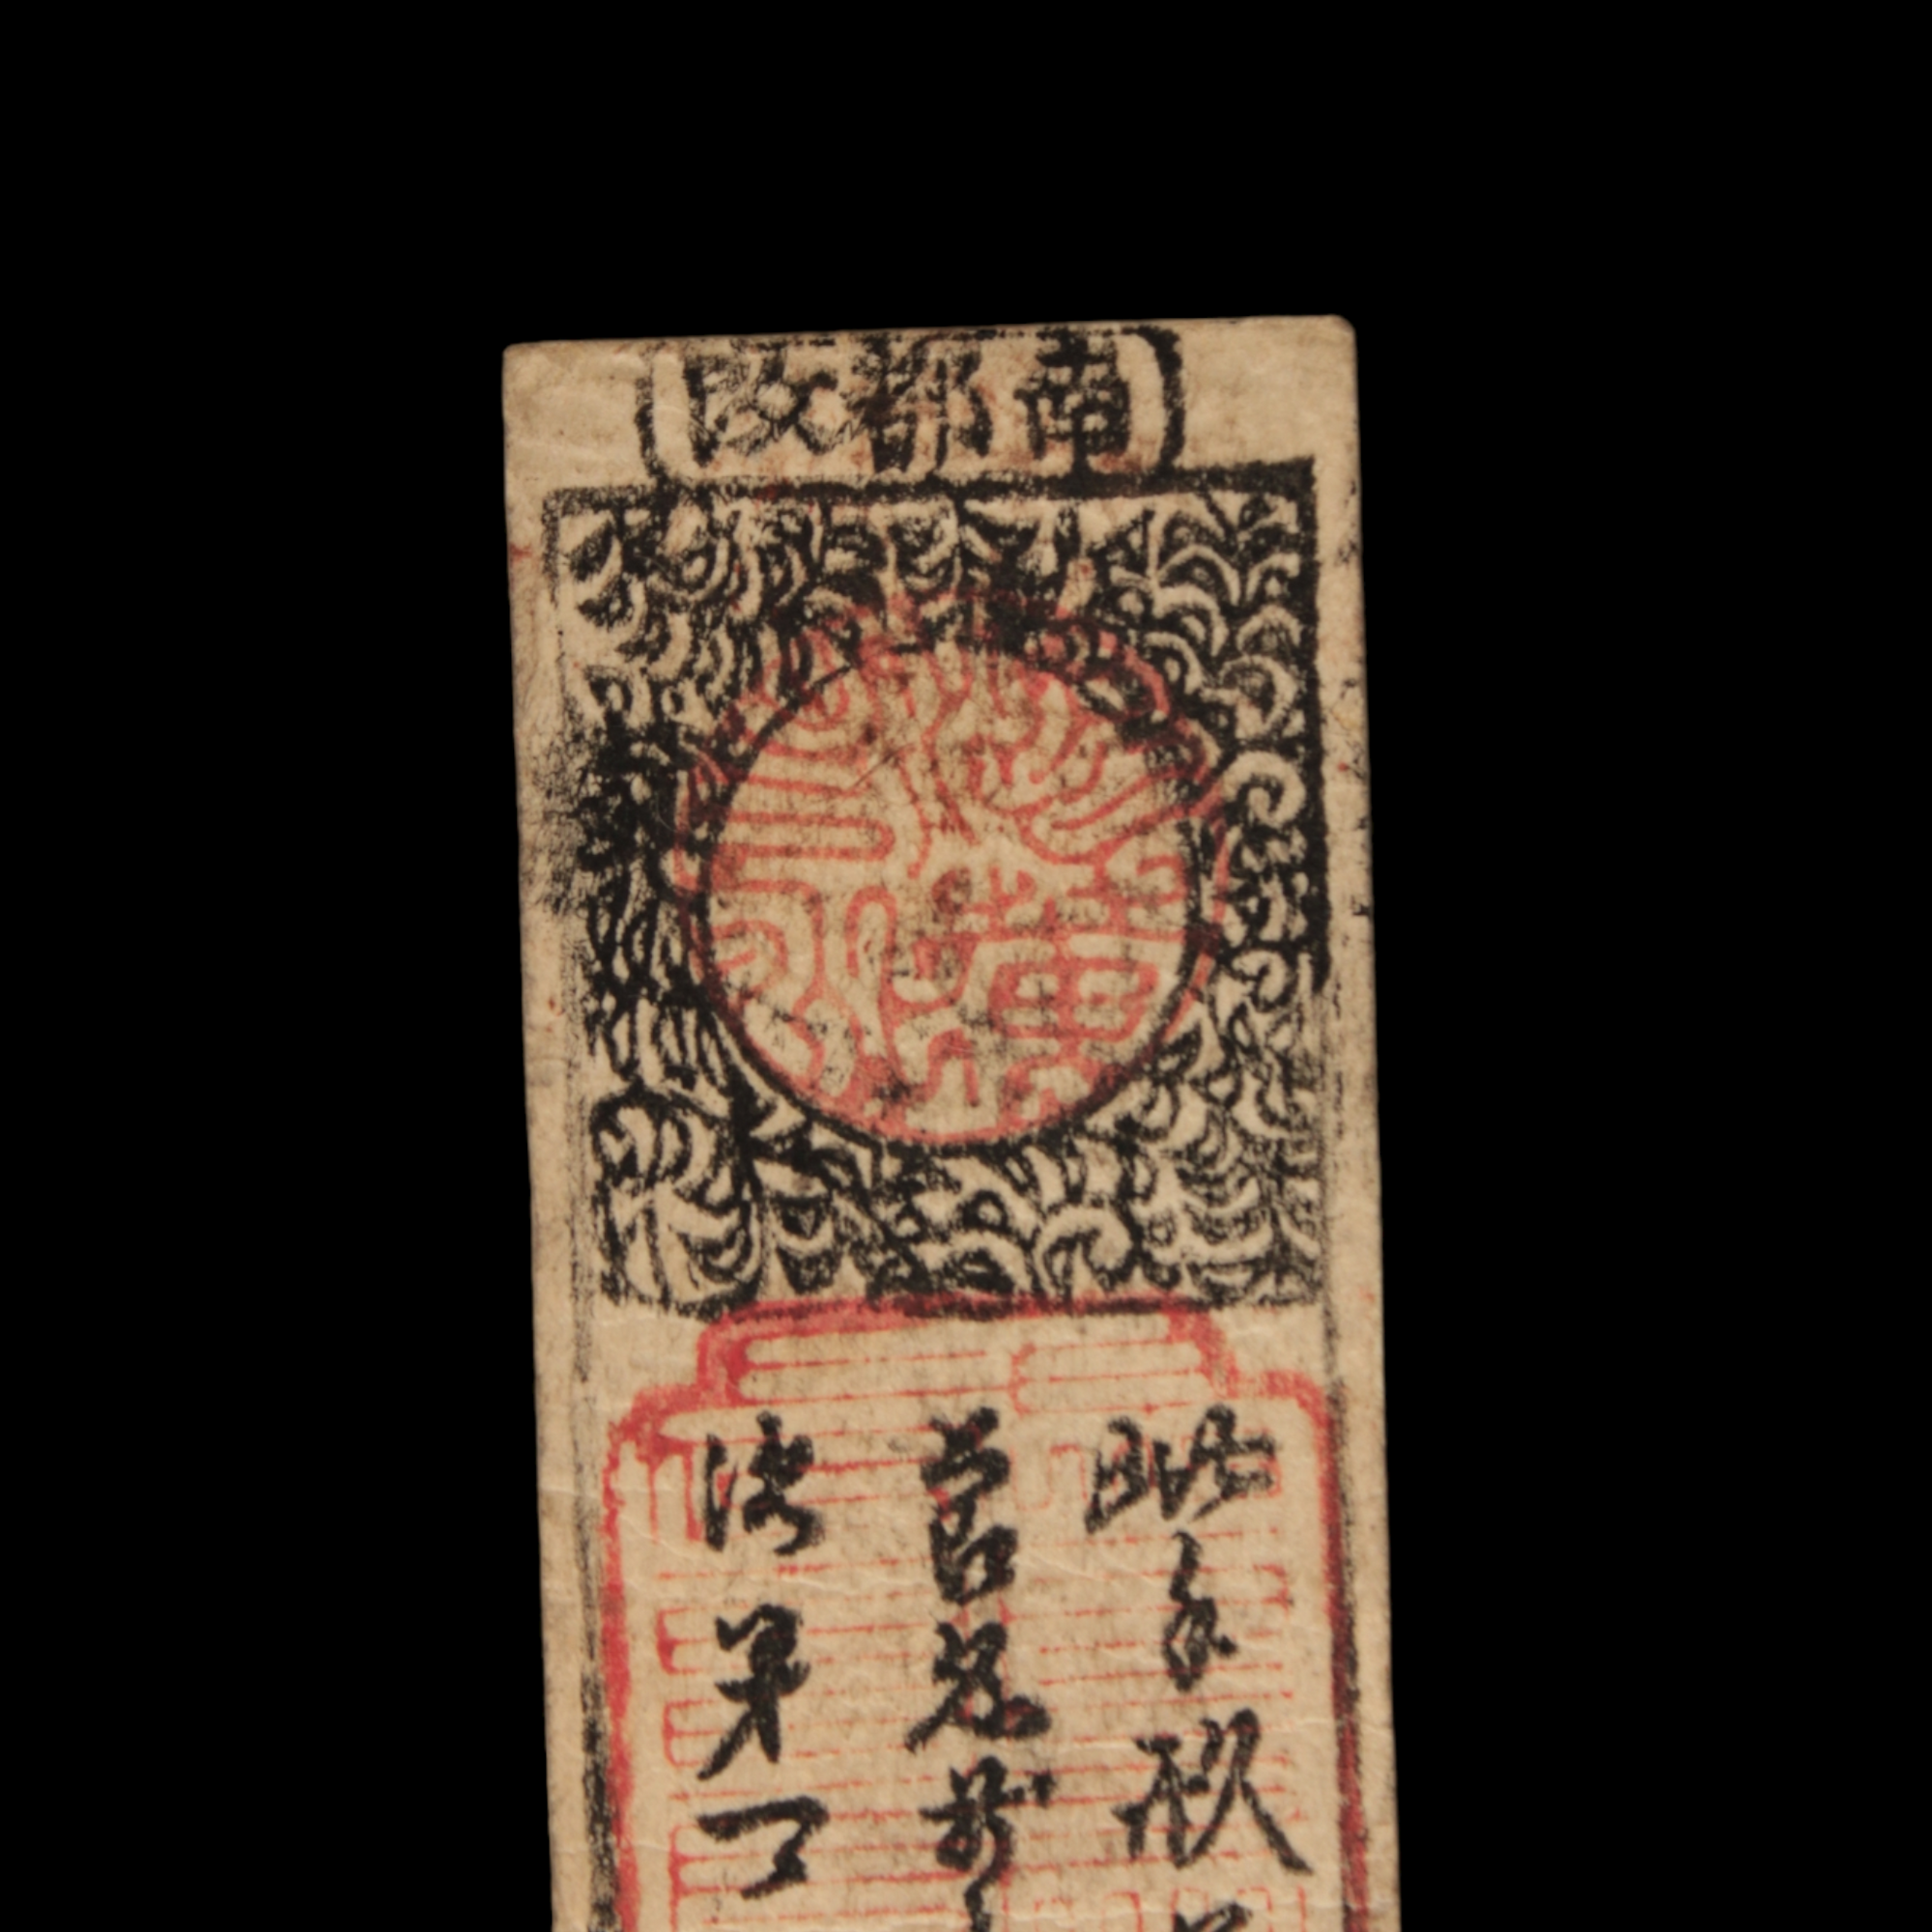 Hansatsu, 1 Silver Momne - Keio 2 (1866) - Edo Japan - 3/15/23 Auction